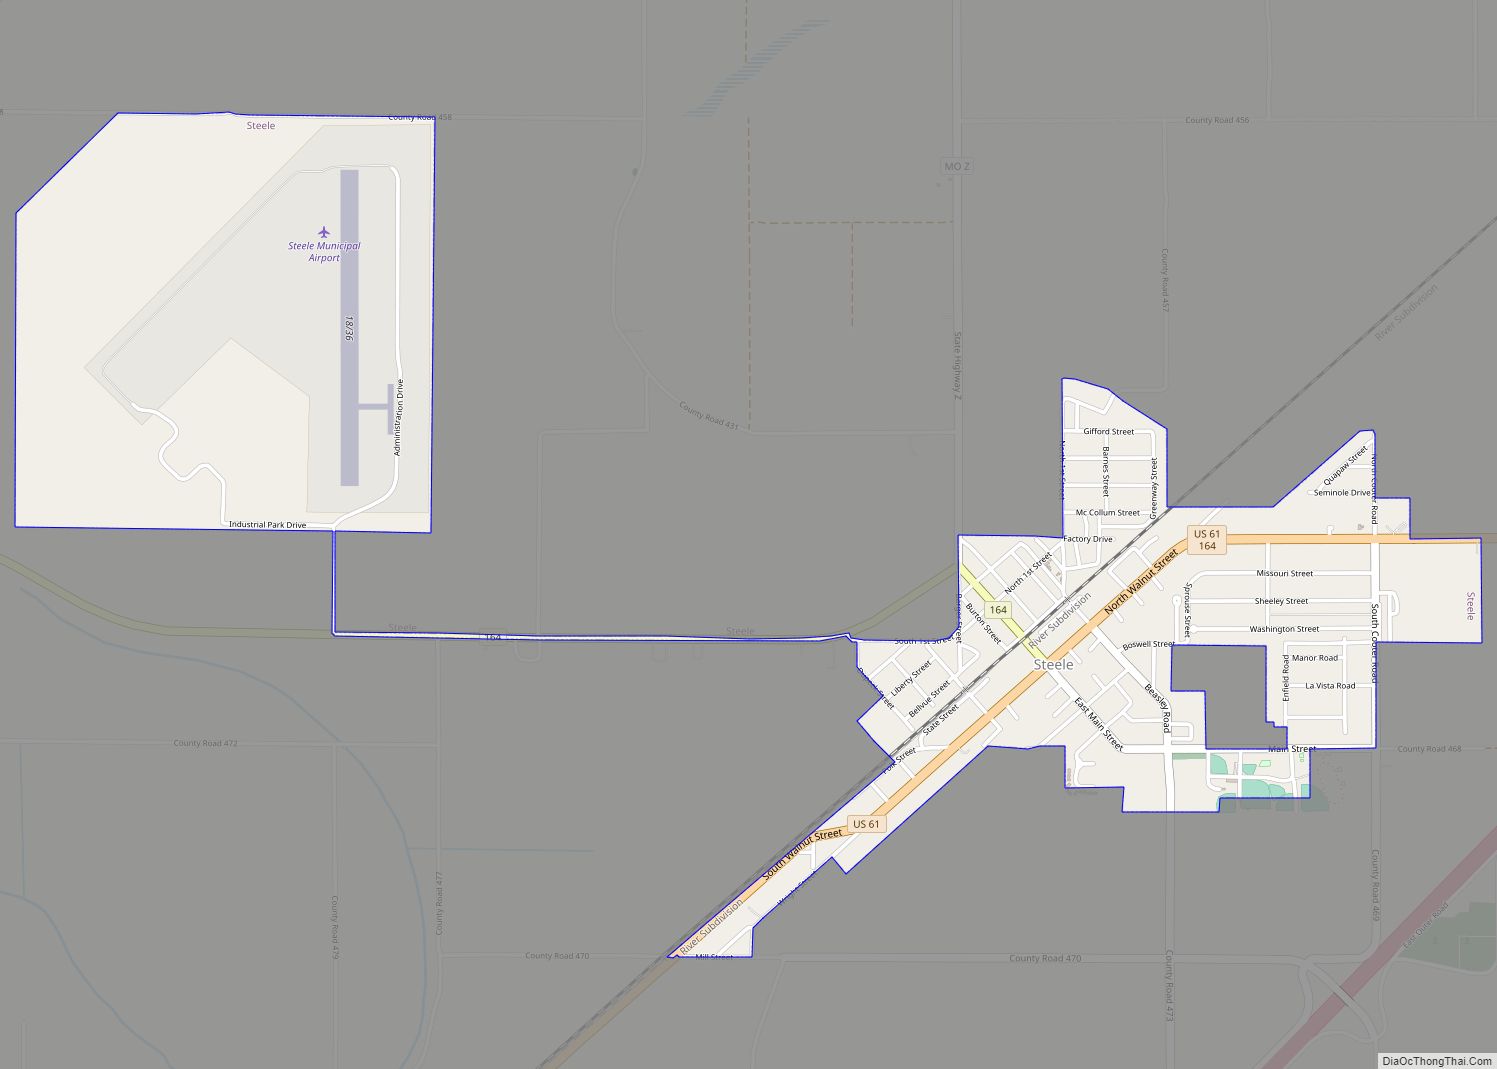 Map of Steele city, Missouri